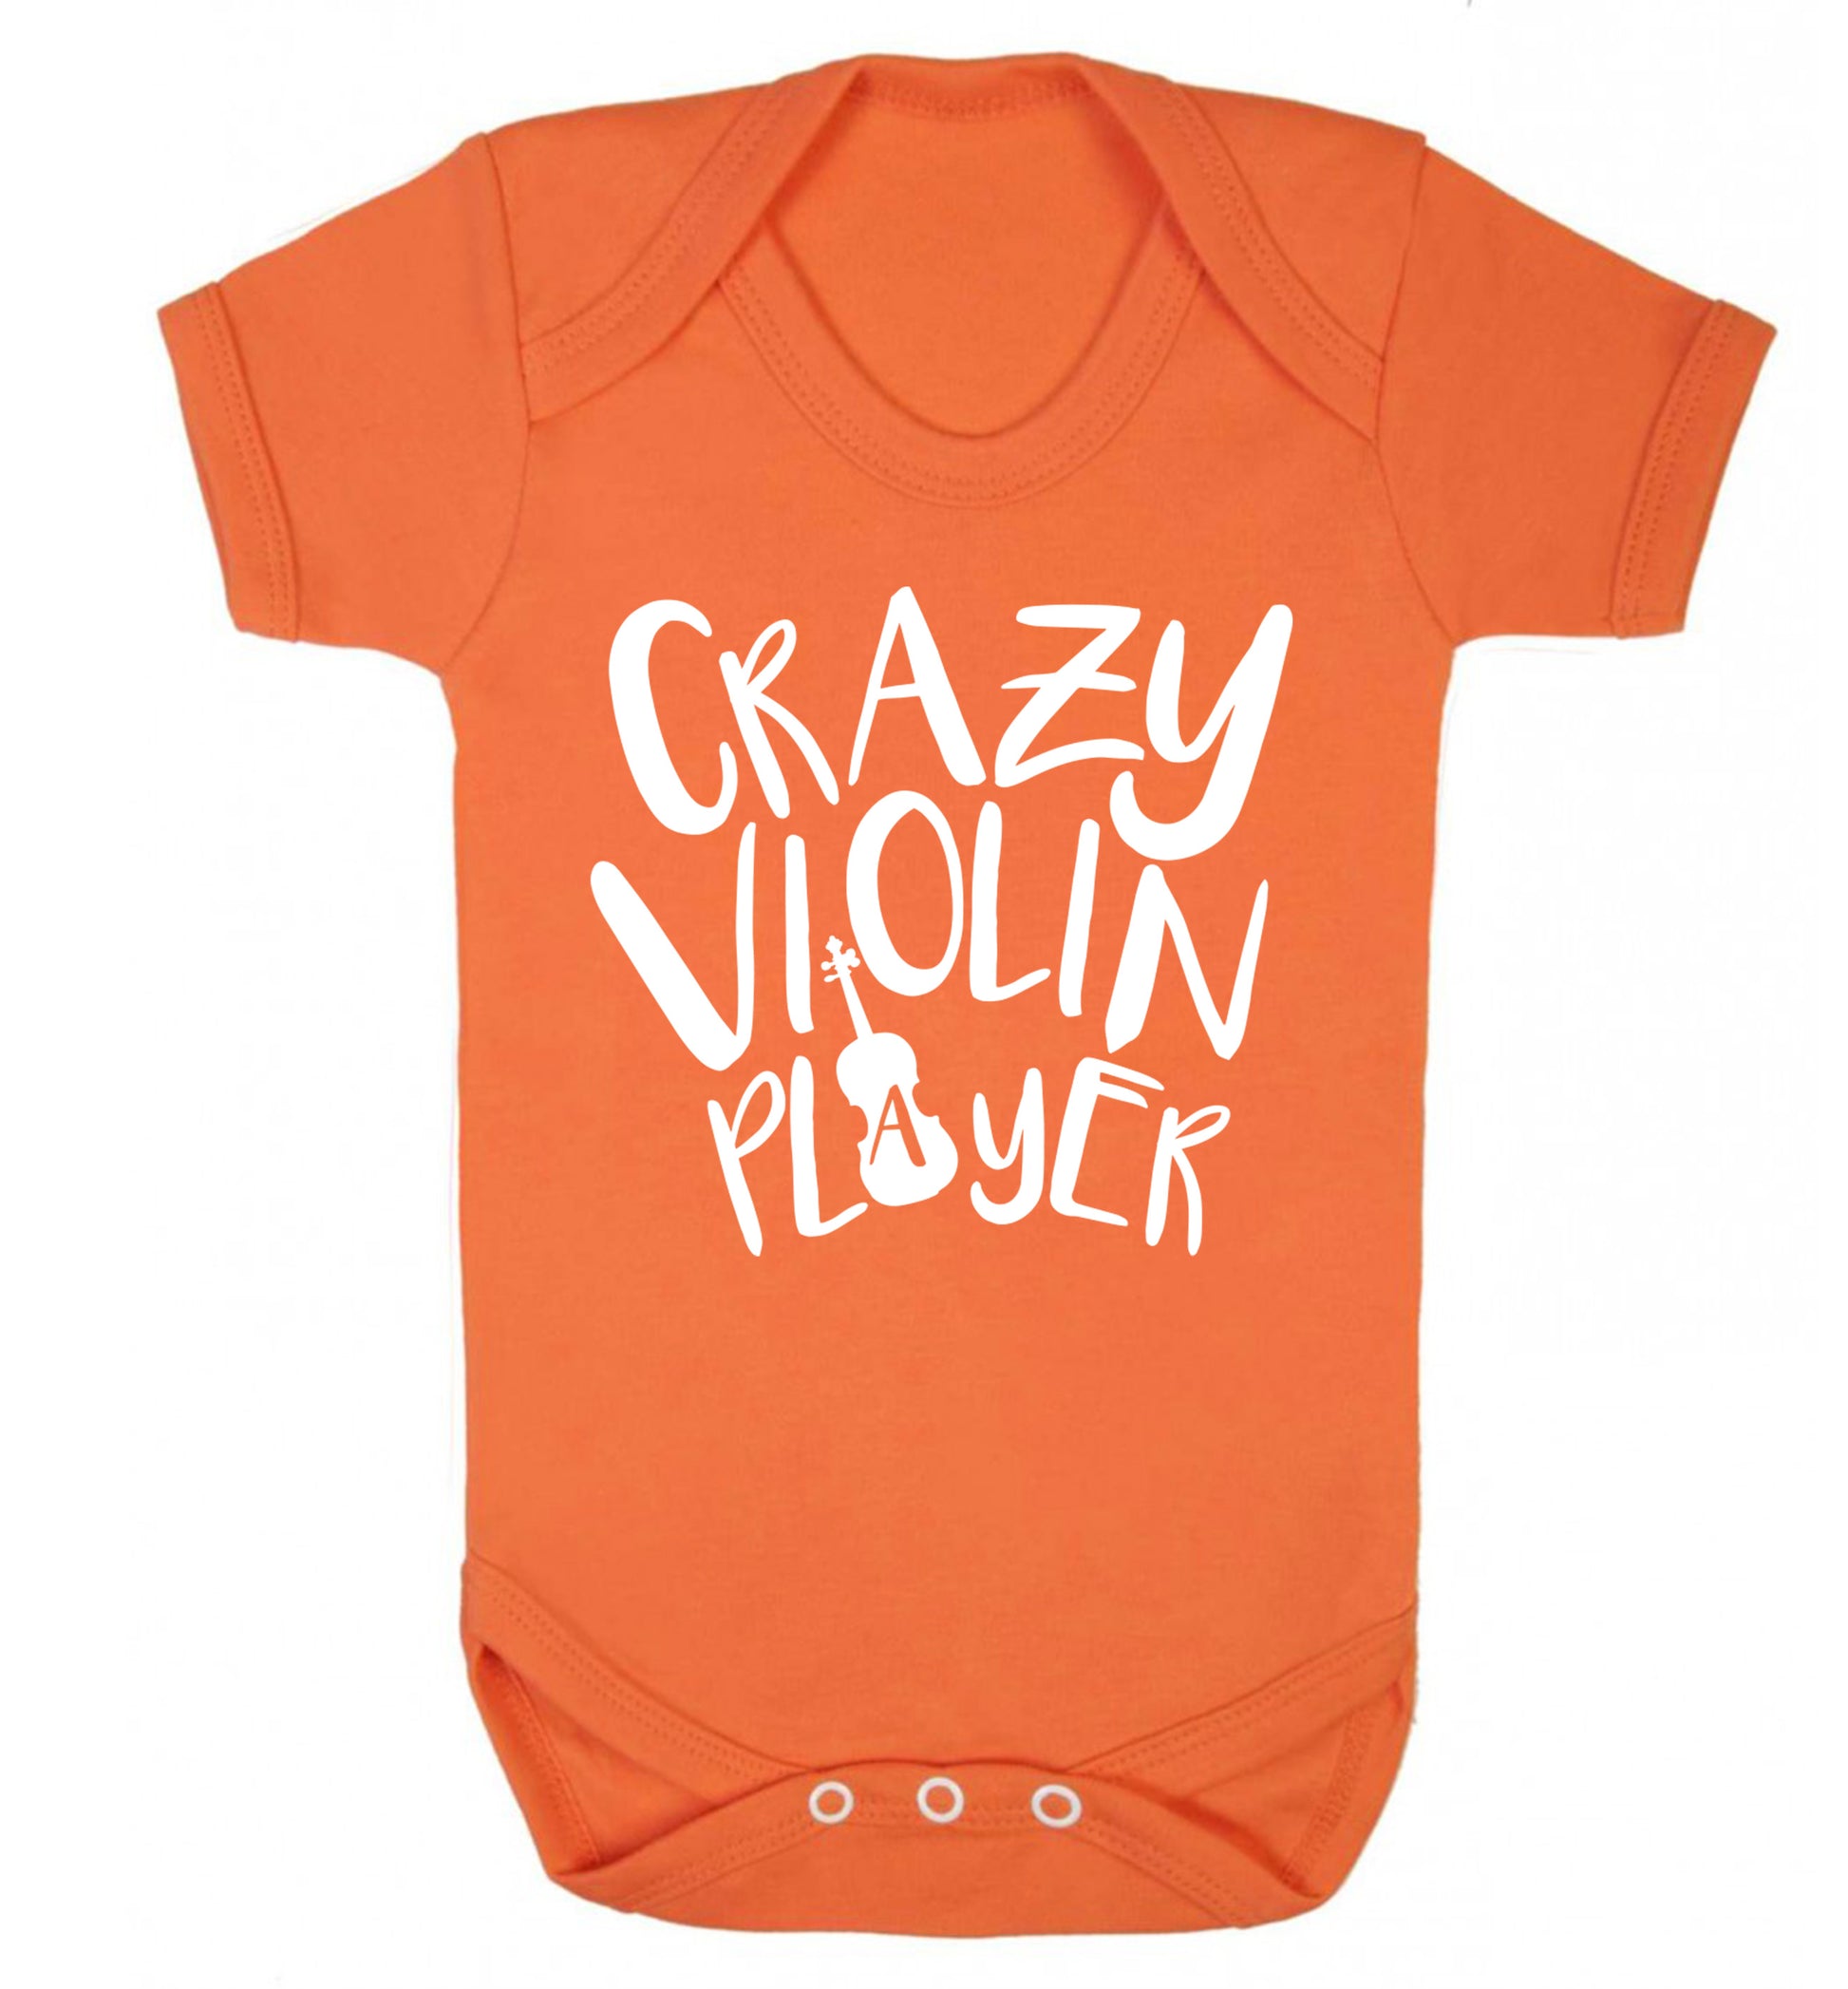 Crazy Violin Player Baby Vest orange 18-24 months